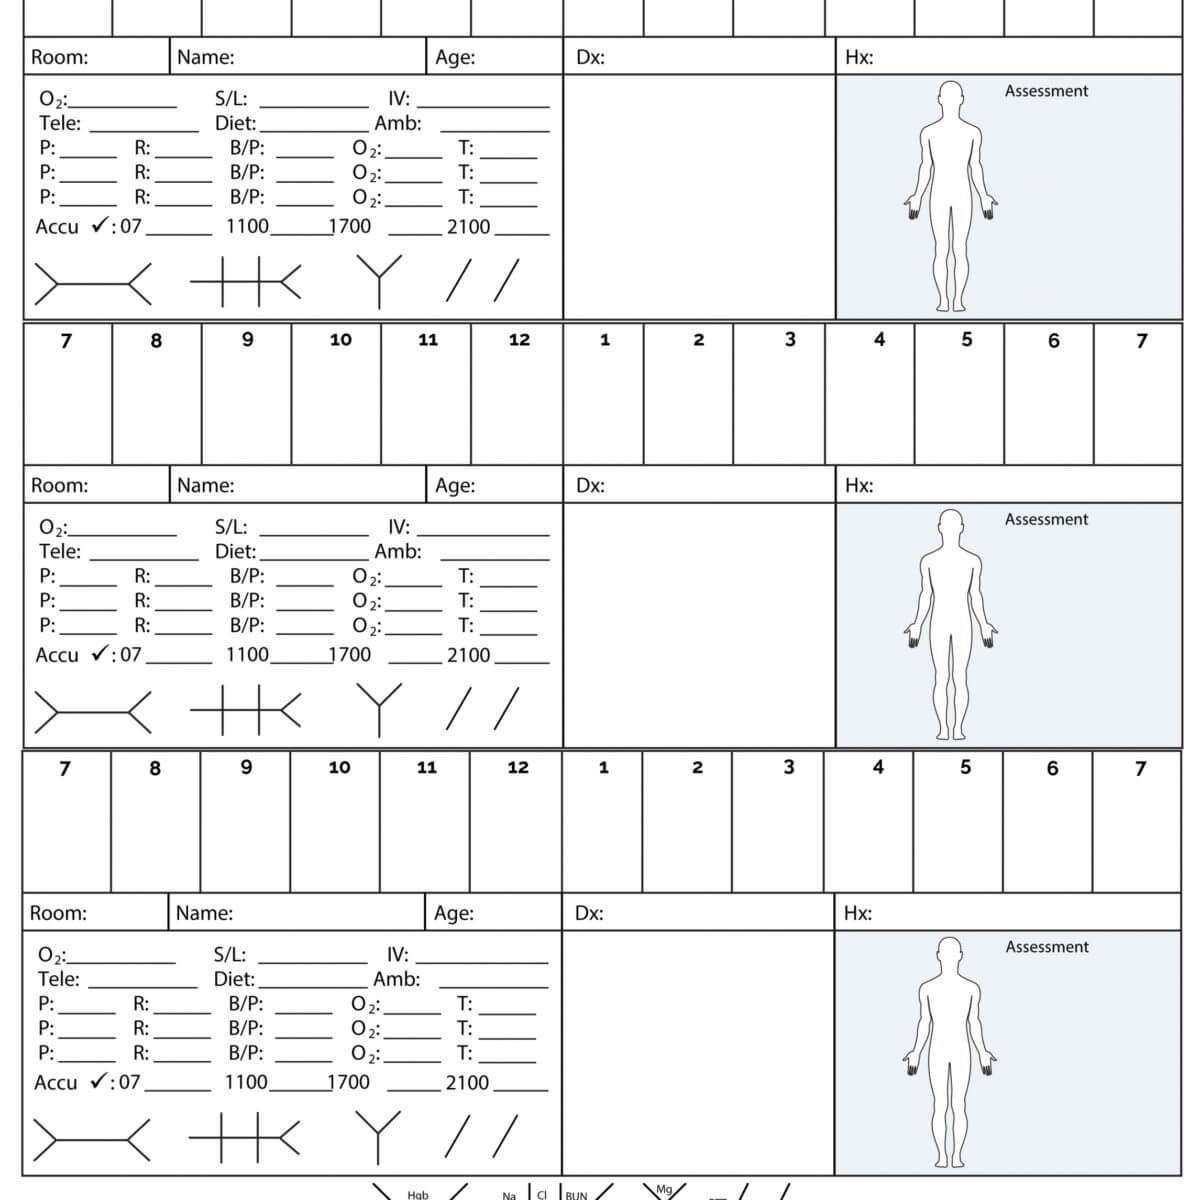 printable-med-surg-nursing-worksheet-printable-templates